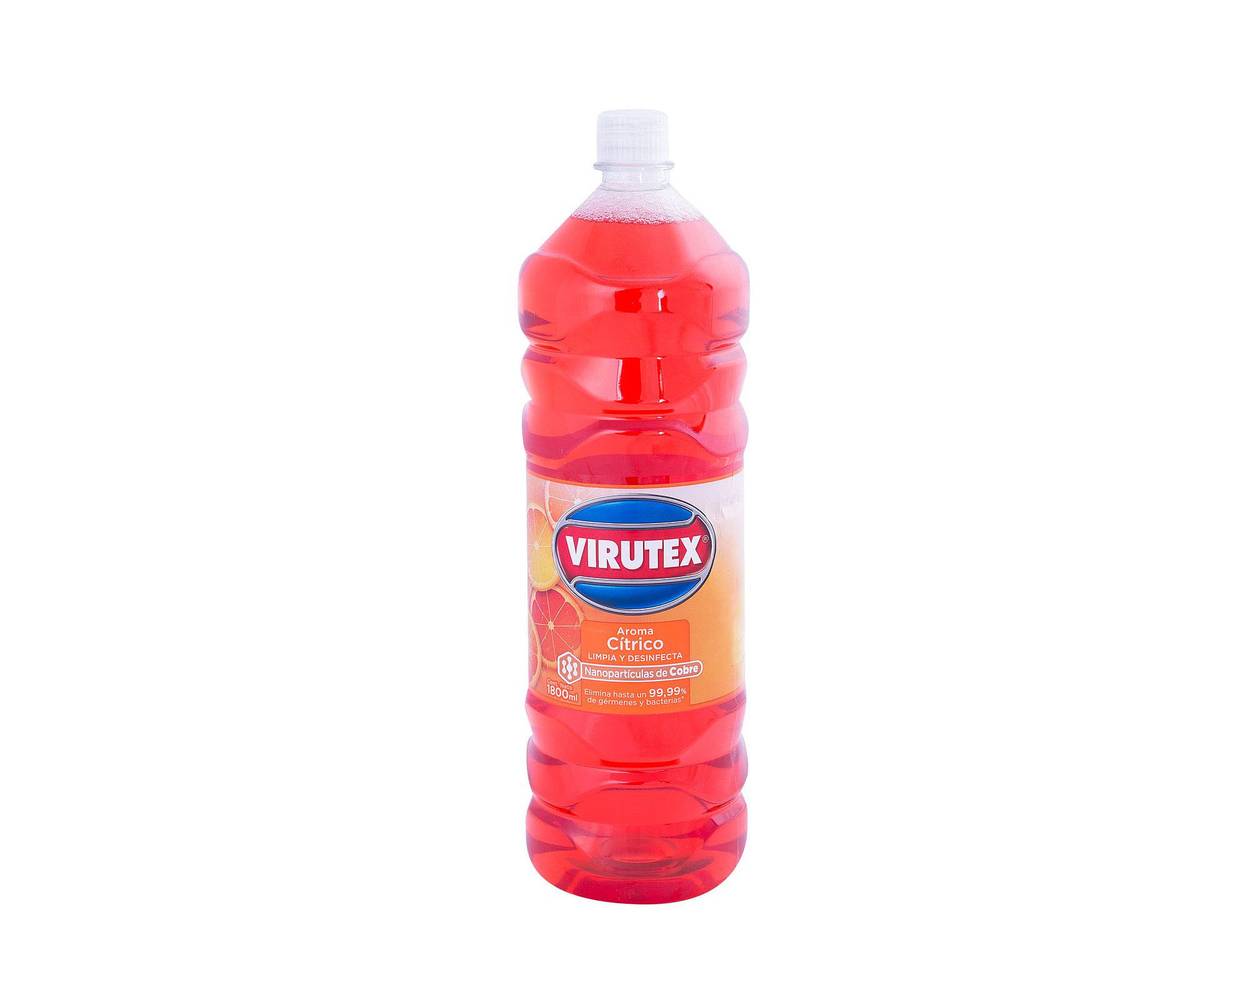 Virutex limpiador de pisos desinfectante aroma cítrico (botella 1,8 l)